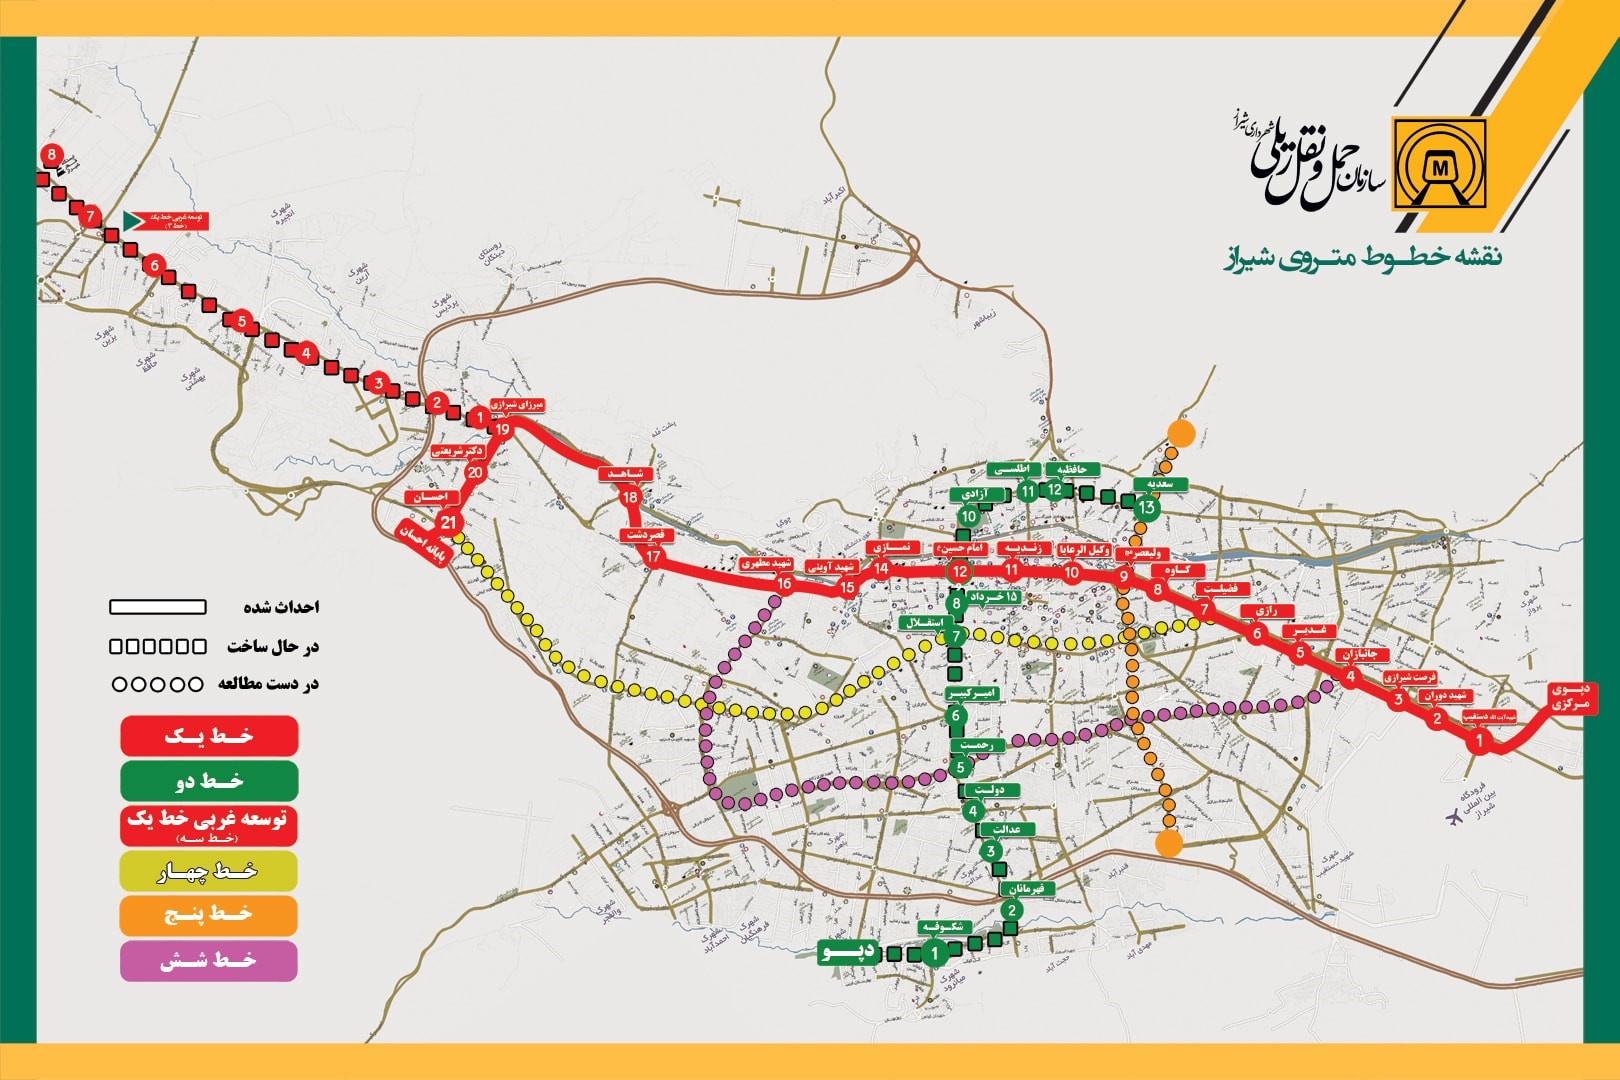 Map of Shiraz metro lines